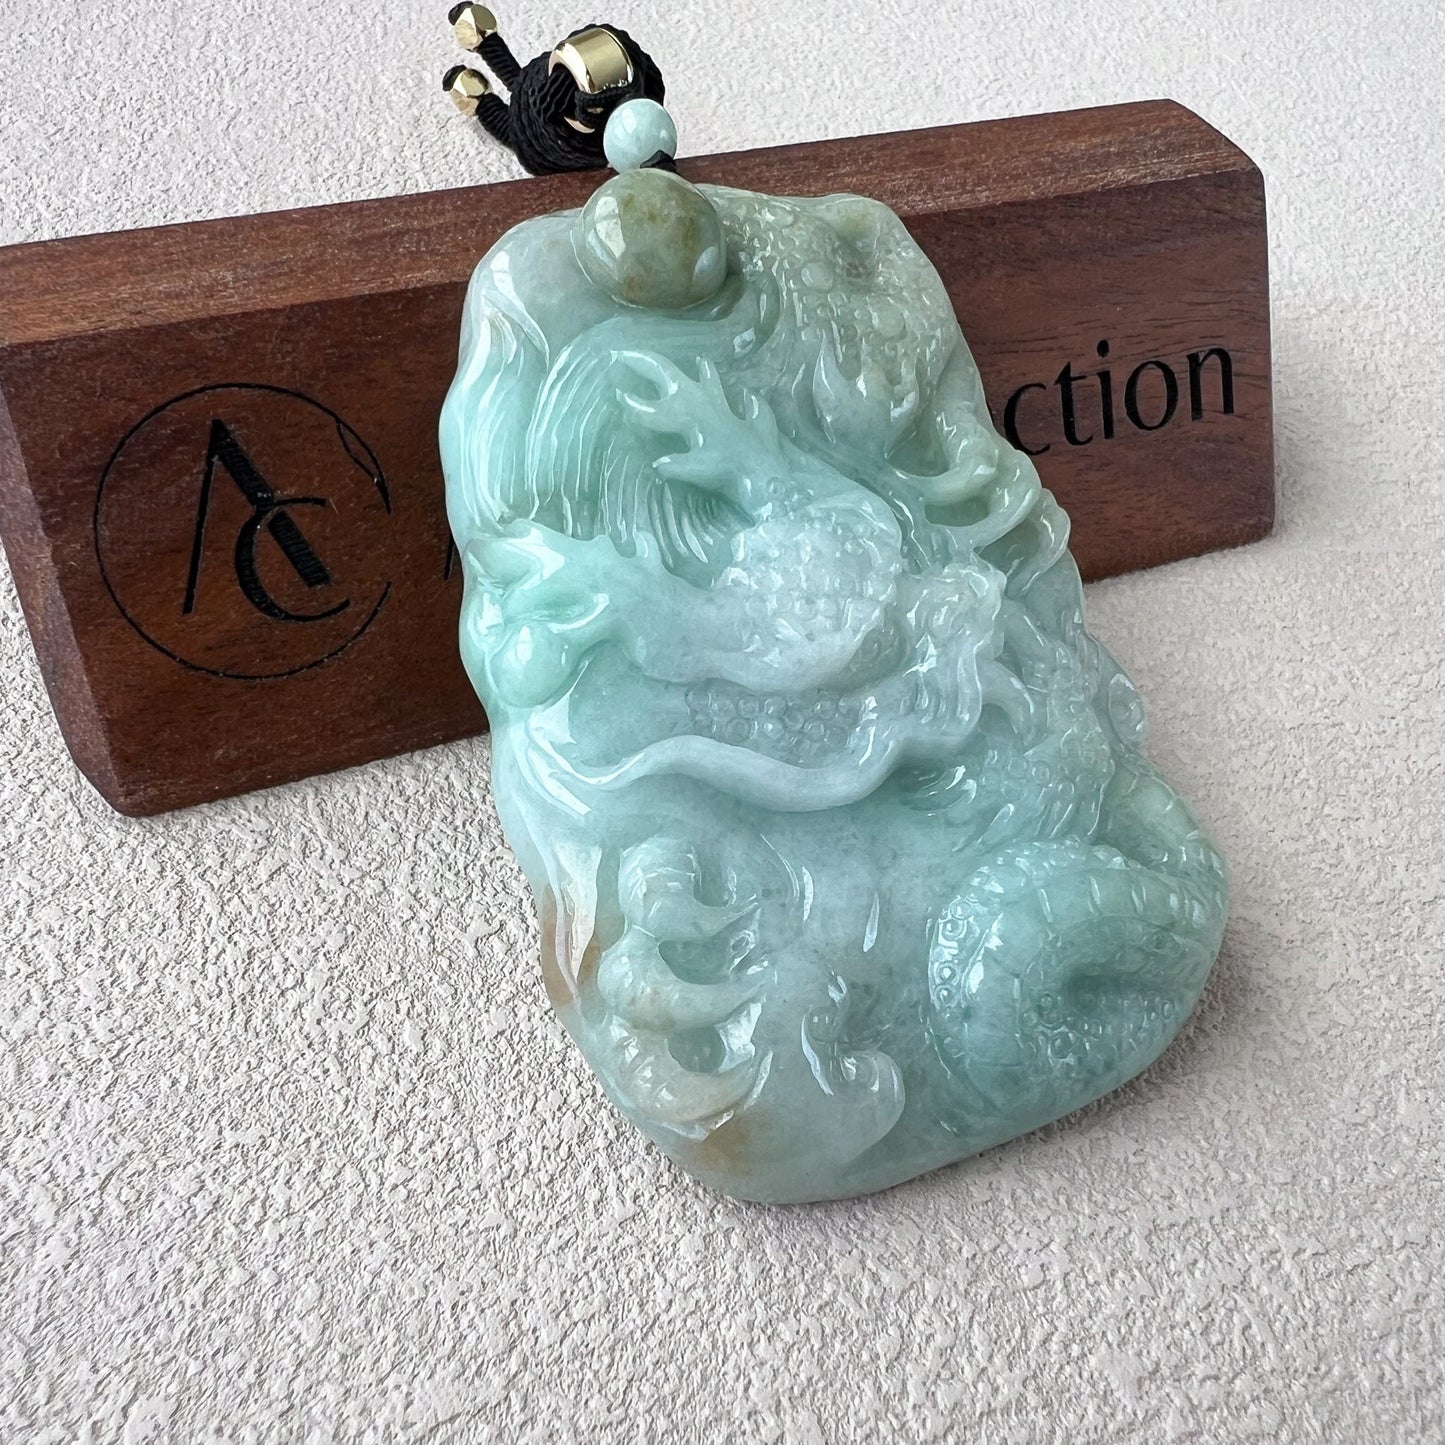 Celestial Dragon Jade Orb Pendant, Green Jadeite Jade Dragon Hand Carved Pendant, YJ-0522-0395642